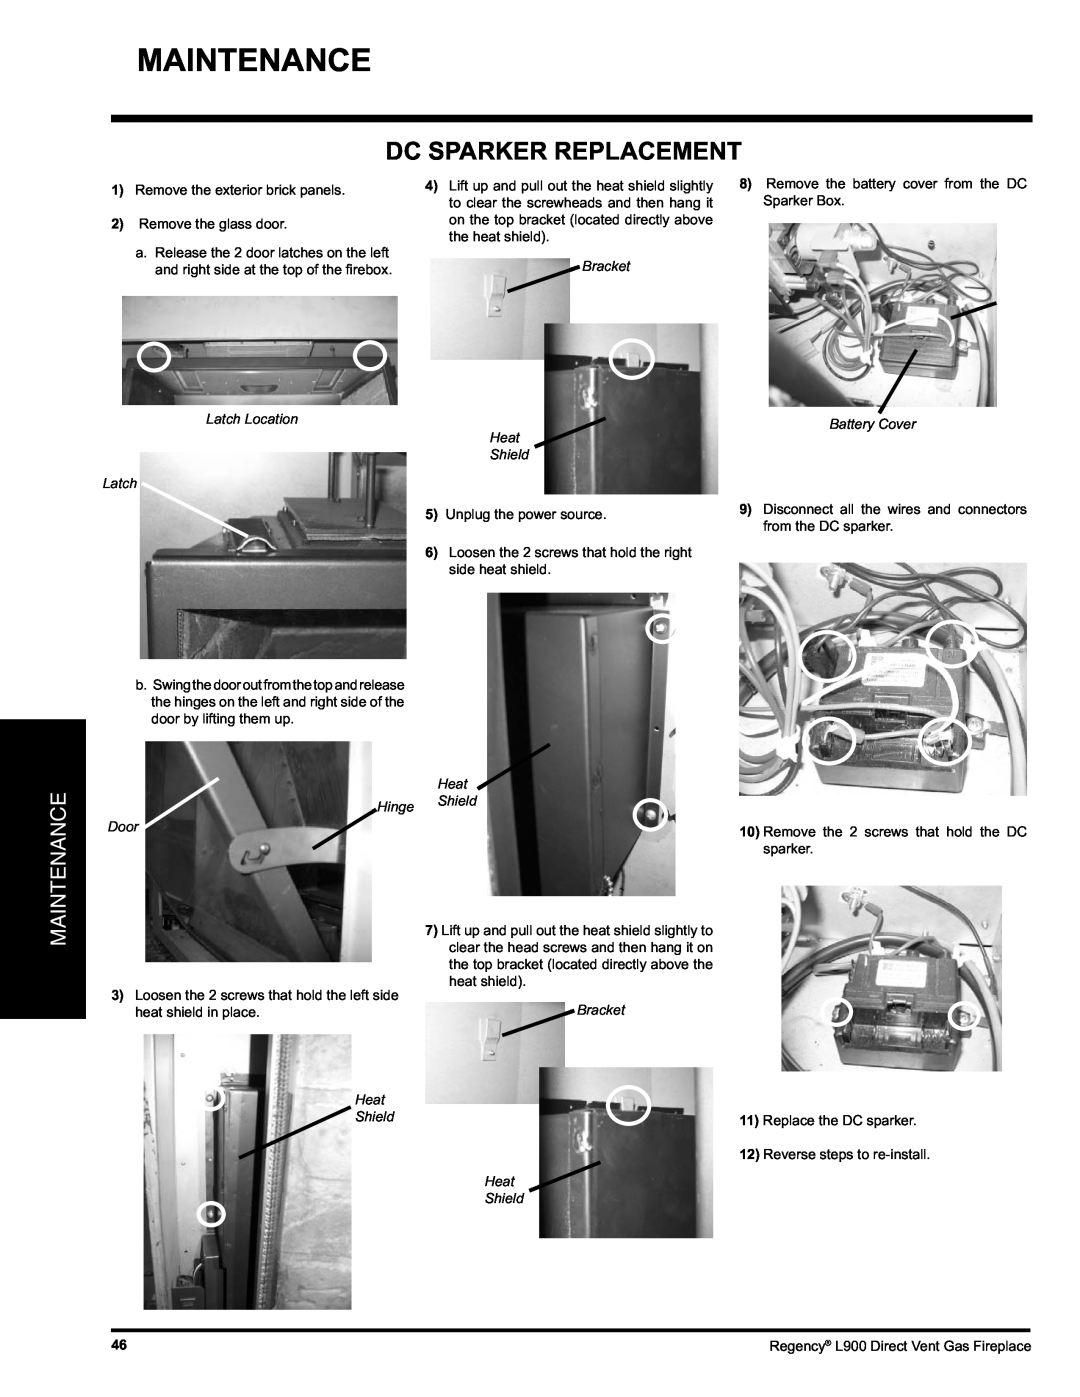 Regency L900-LP Maintenance, Dc Sparker Replacement, Bracket, Latch Location Latch, Heat Shield, Battery Cover, Hinge Door 